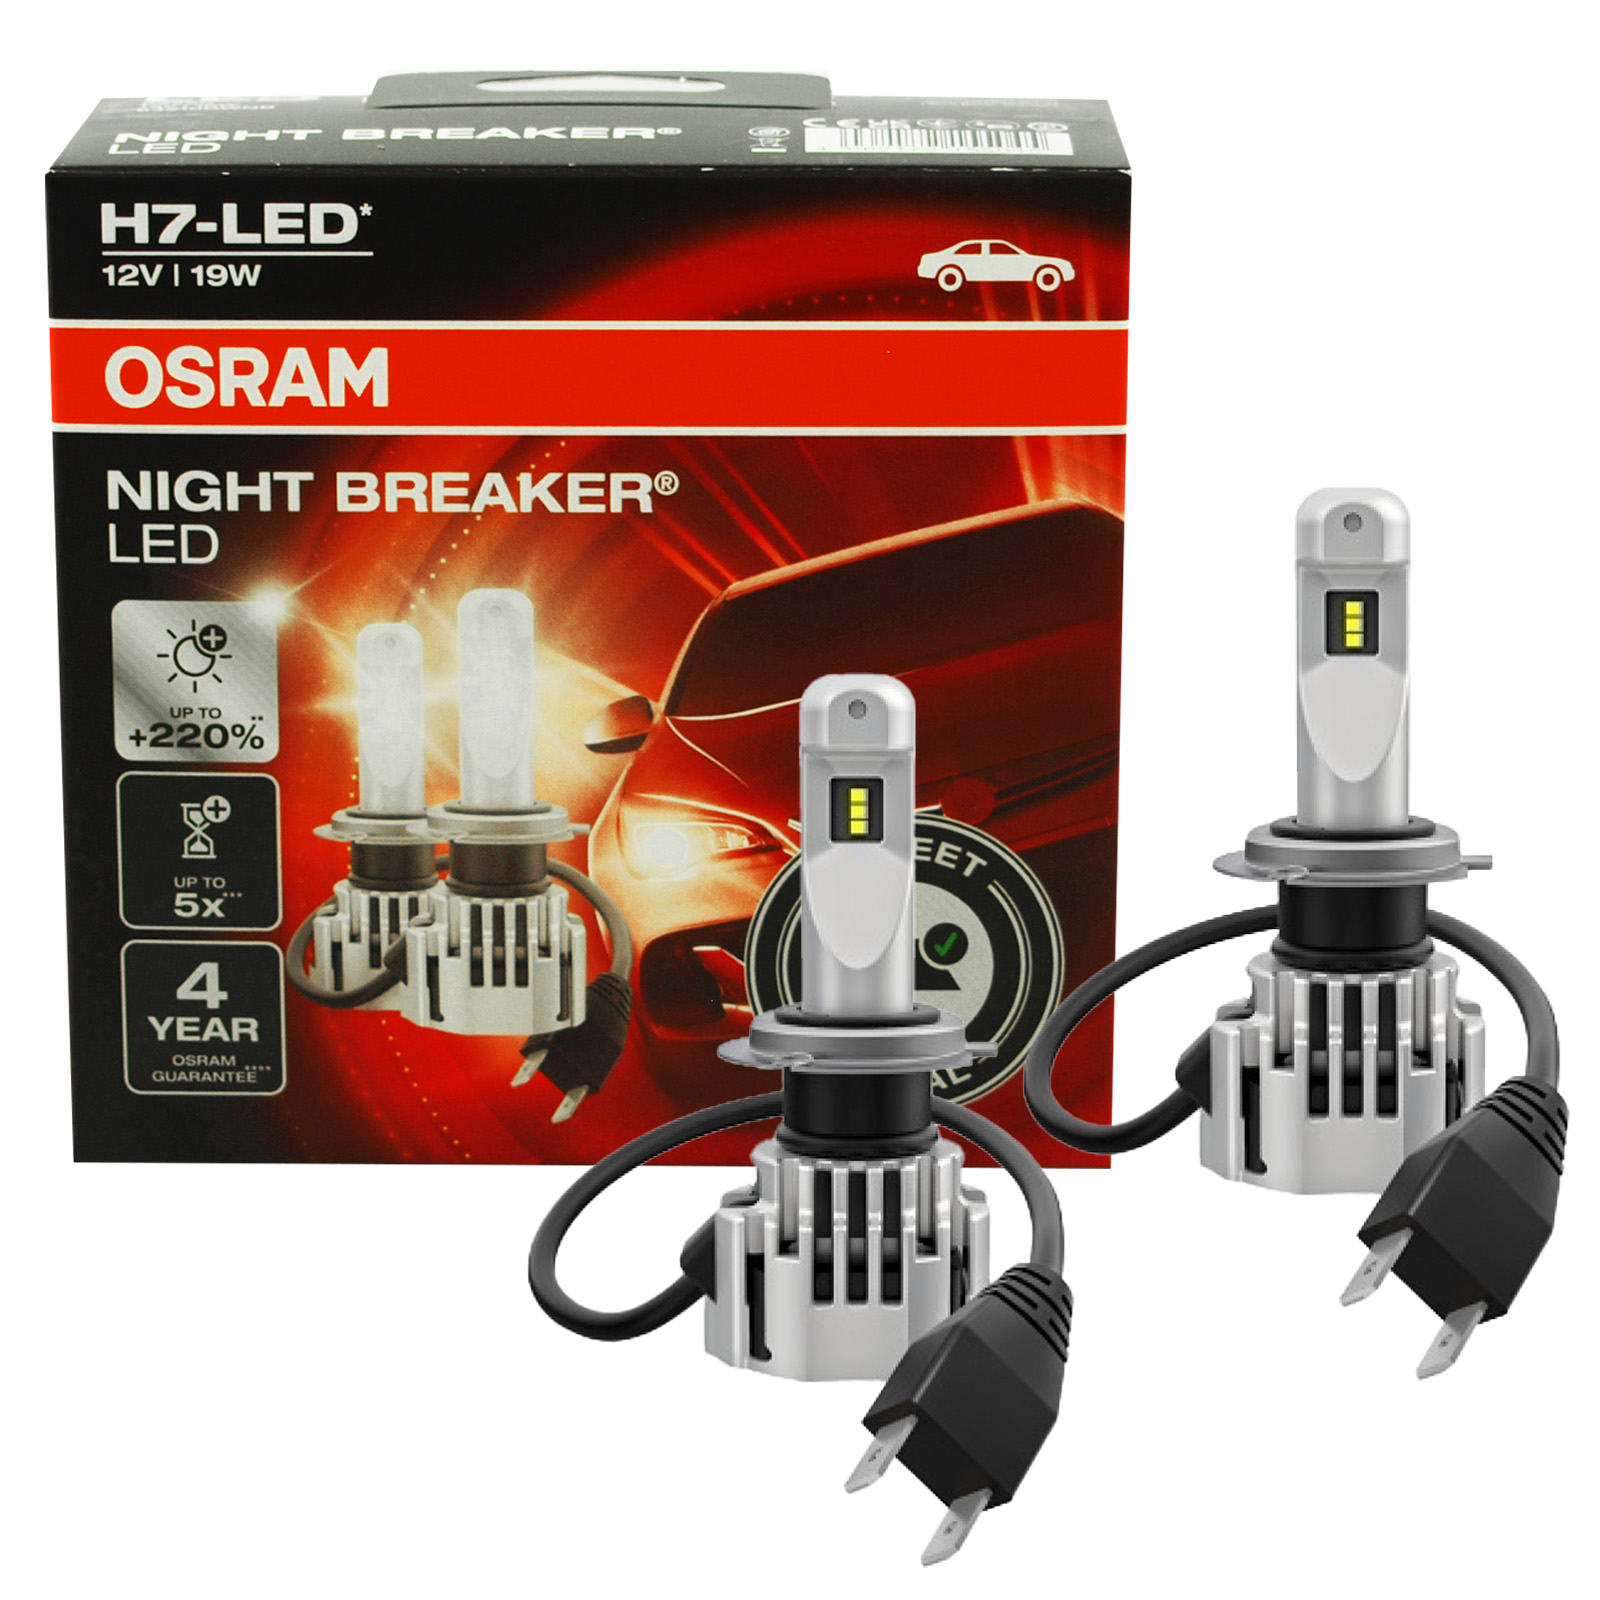 OSRAM H7 NIGHT BREAKER LED Bulbs Scheinwerferlampen